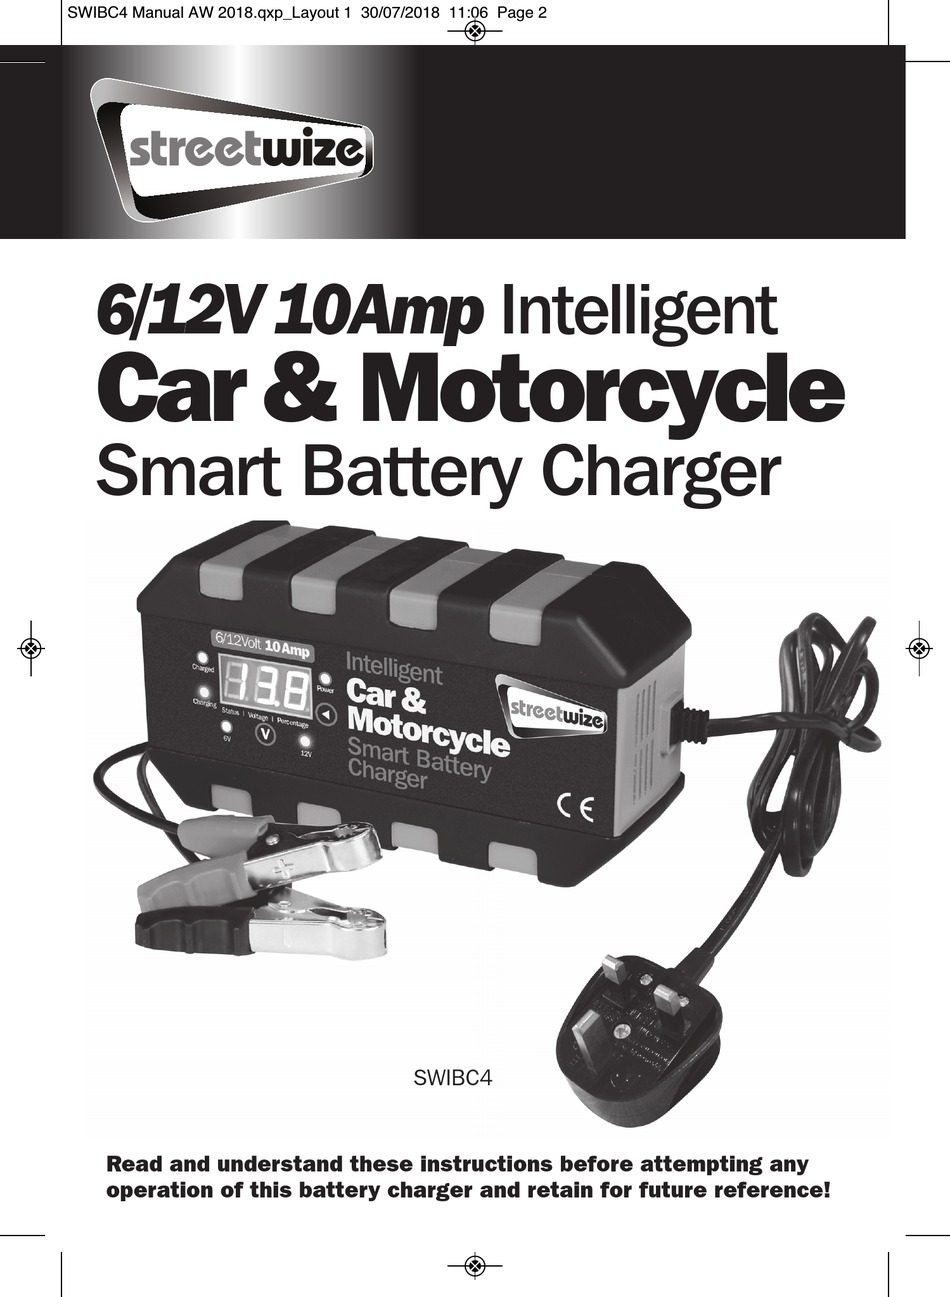 Streetwize Car & Motorbike 10 Amp 6V & 12V Electronic Auto Smart Battery Charger